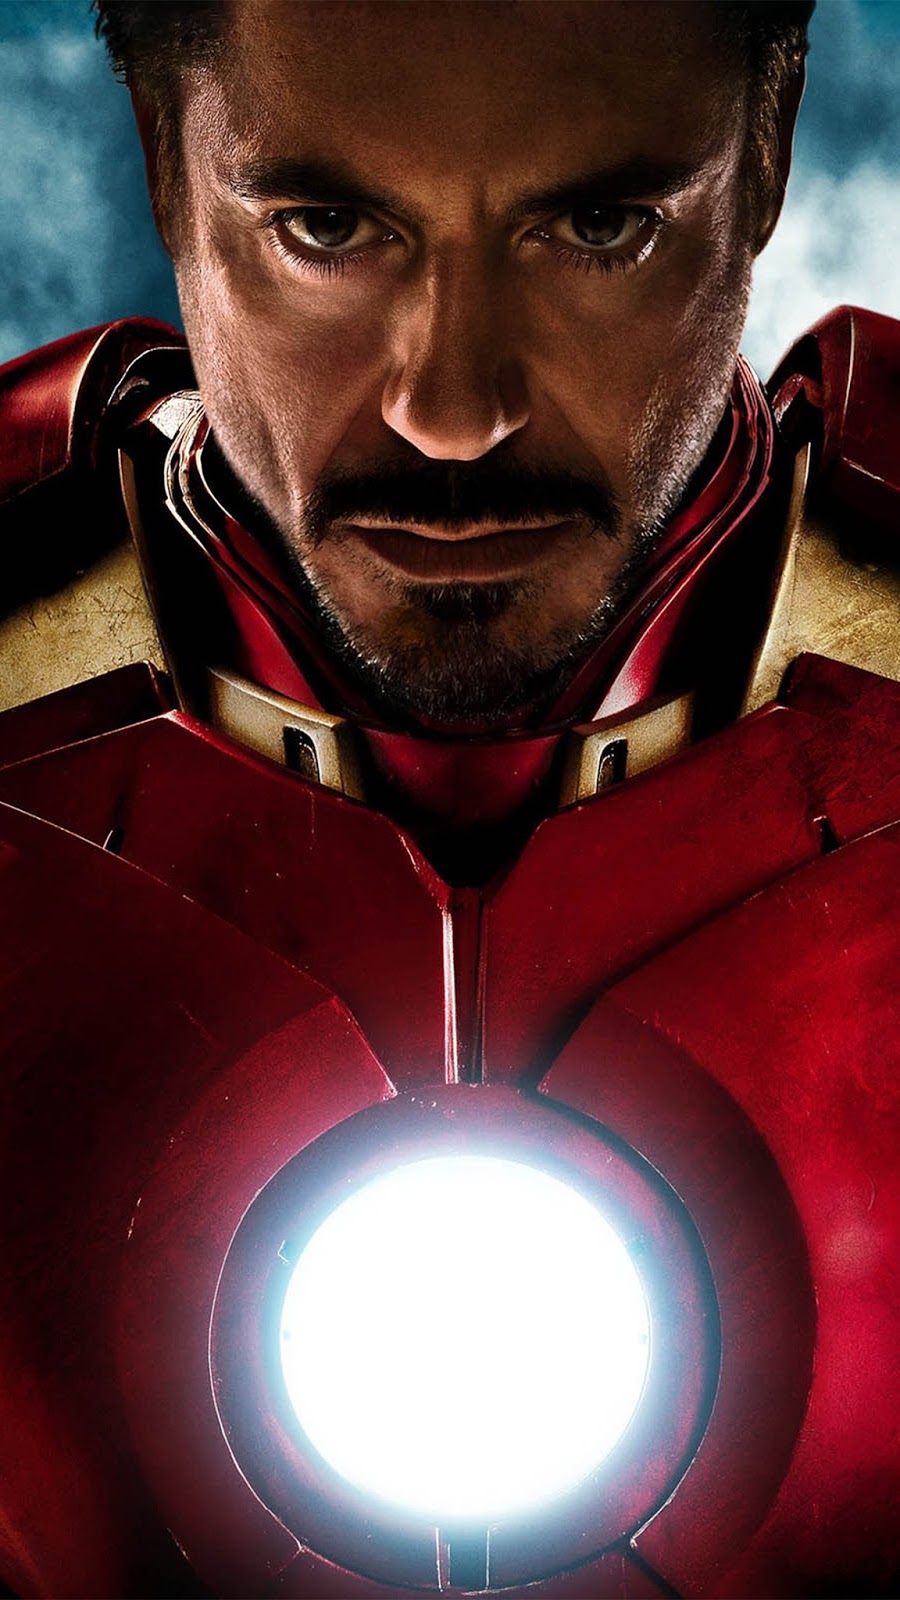 ironman-angry-hero-superhero-red-avengers-iphone6-plus-wallpaper.jpg